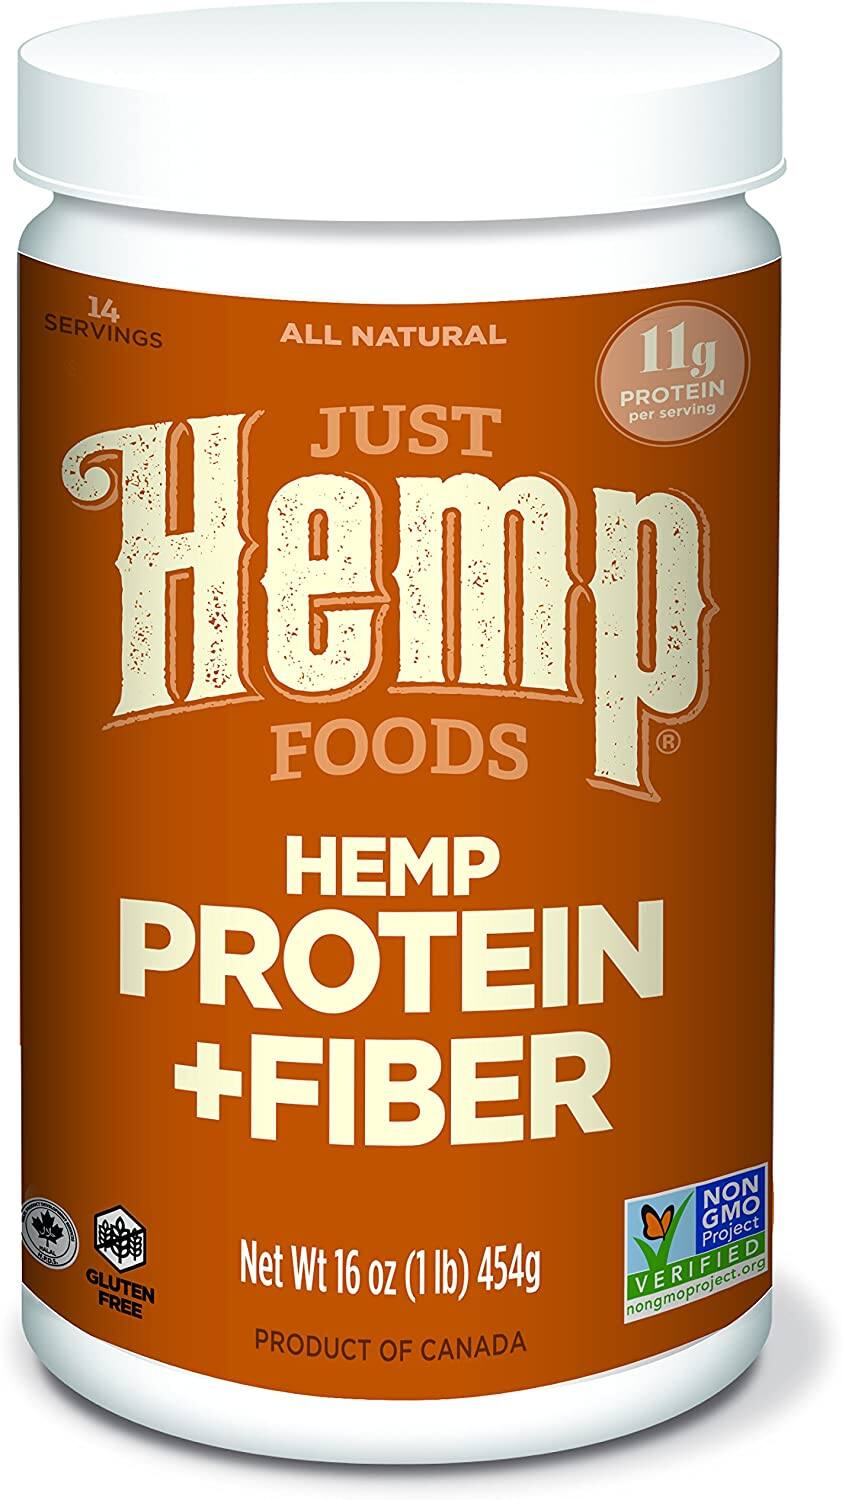 16-Oz Just Hemp Foods Hemp Protein Powder Plus Fiber $2.04 + Free Shipping w/ Prime or on $25+